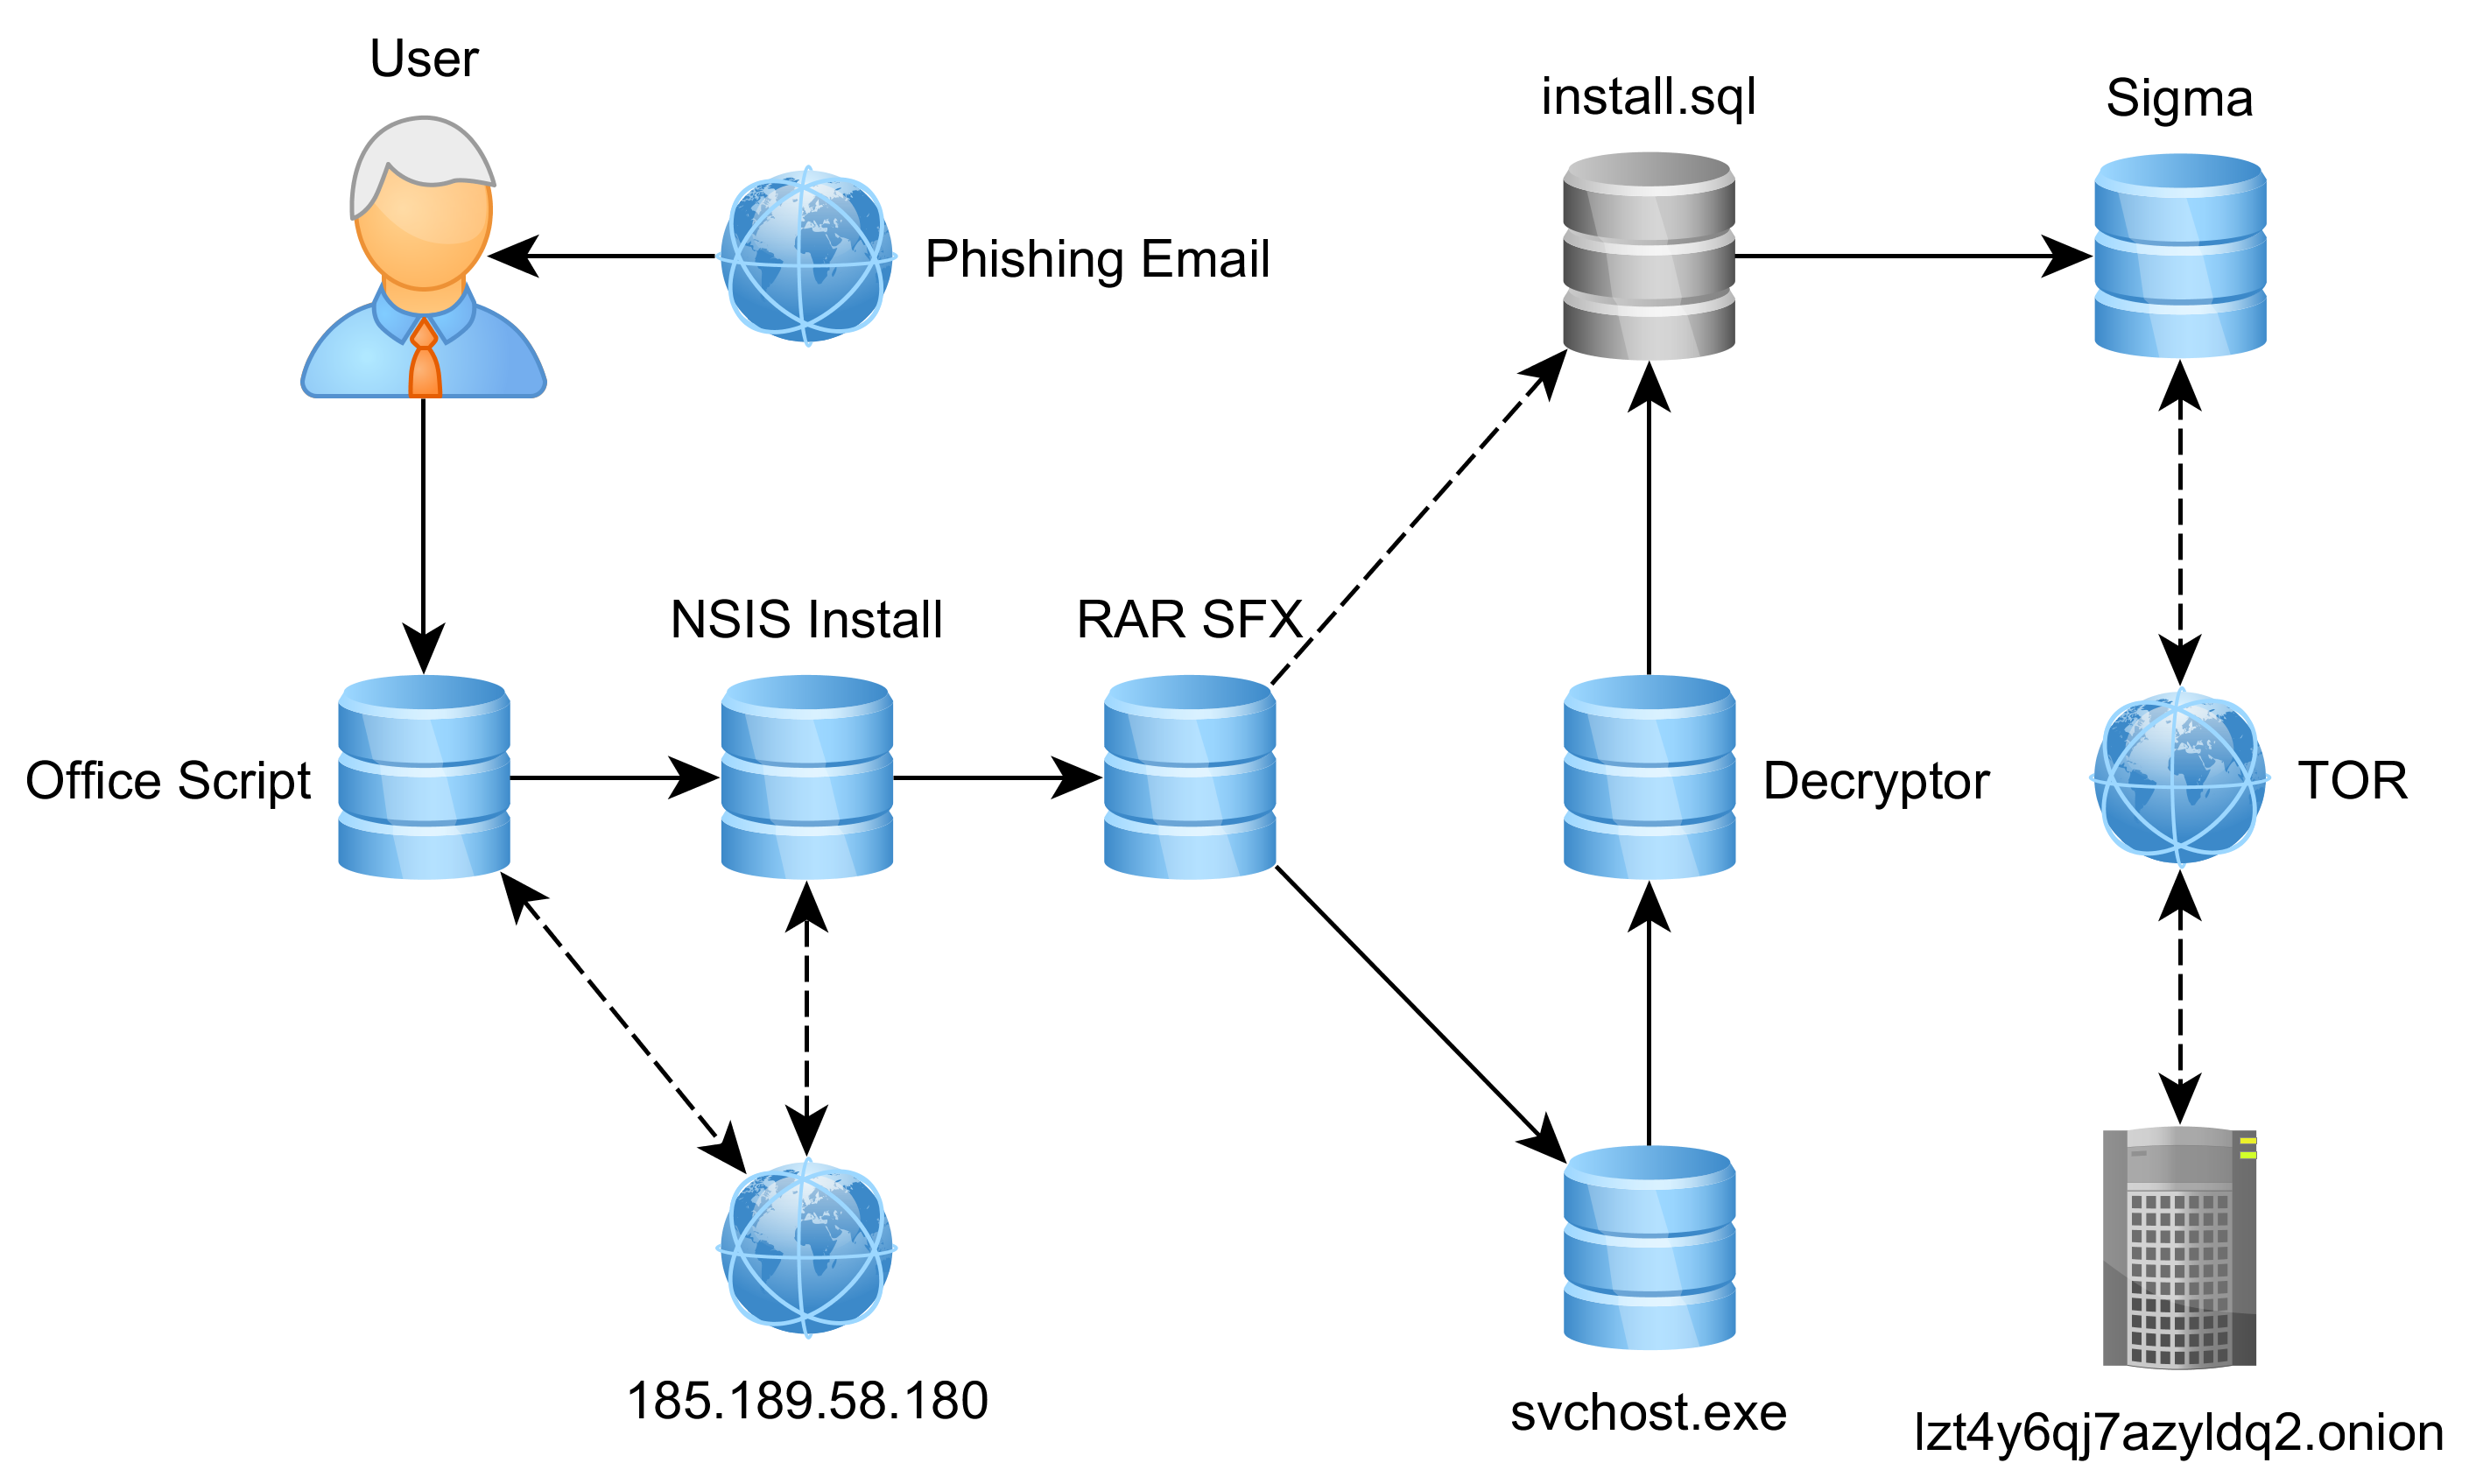 Fonctions du ransomware Sigma